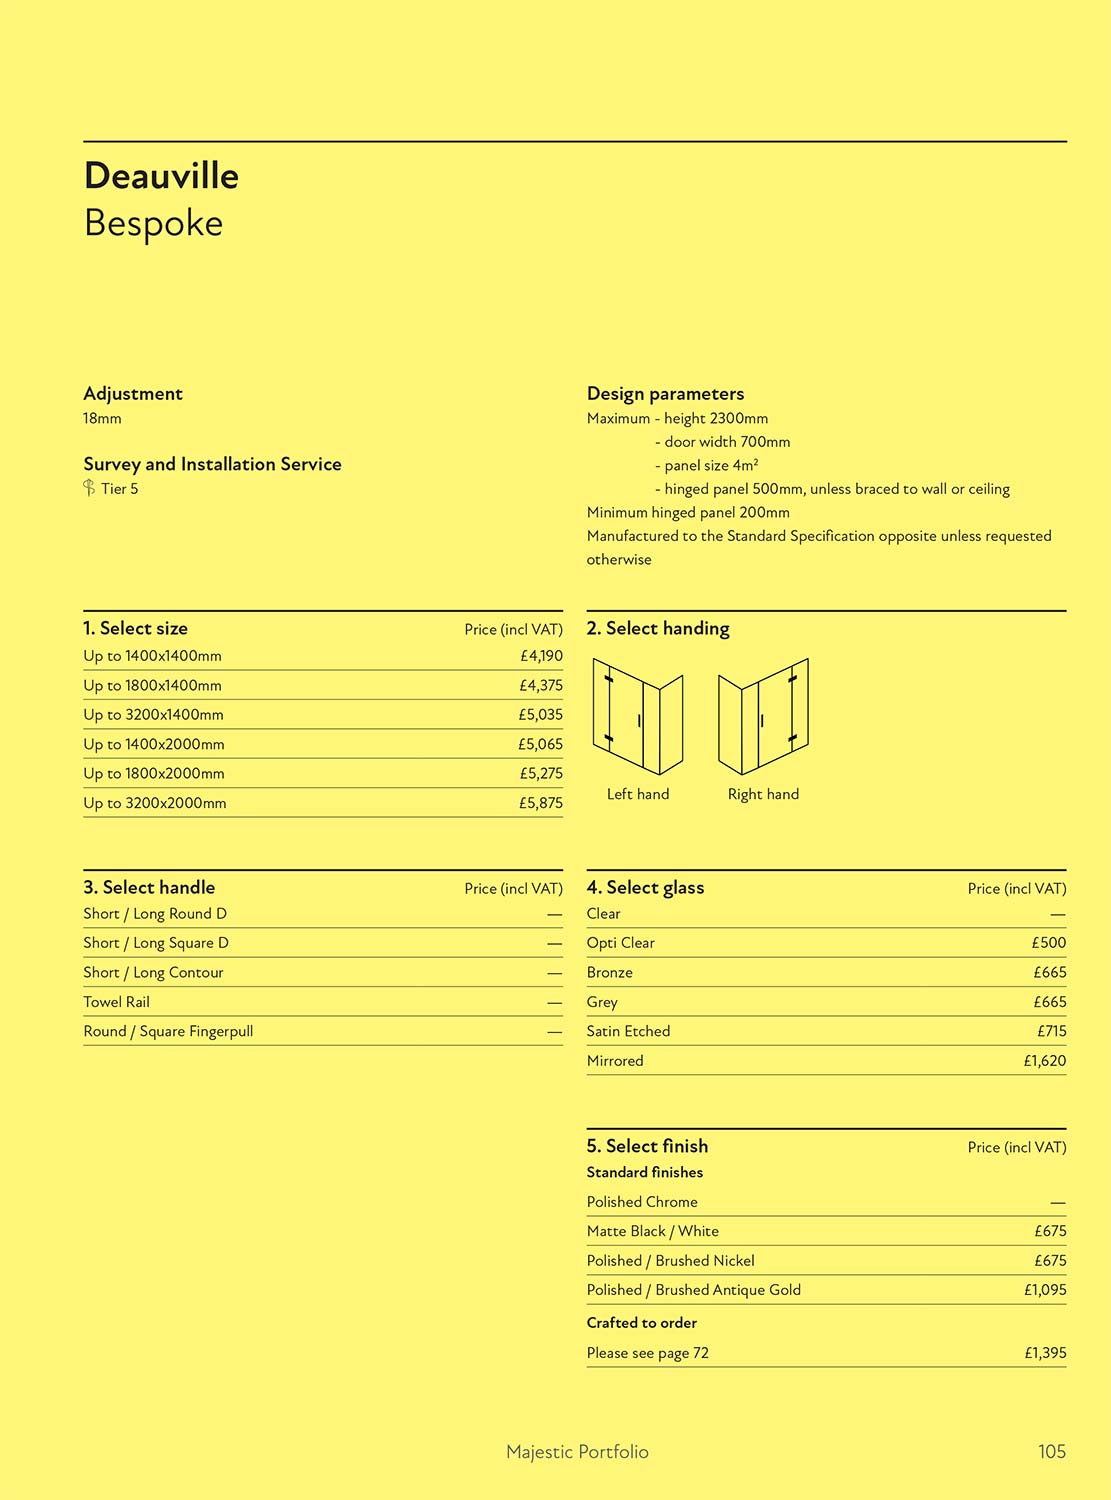 Deauville Bespoke specification